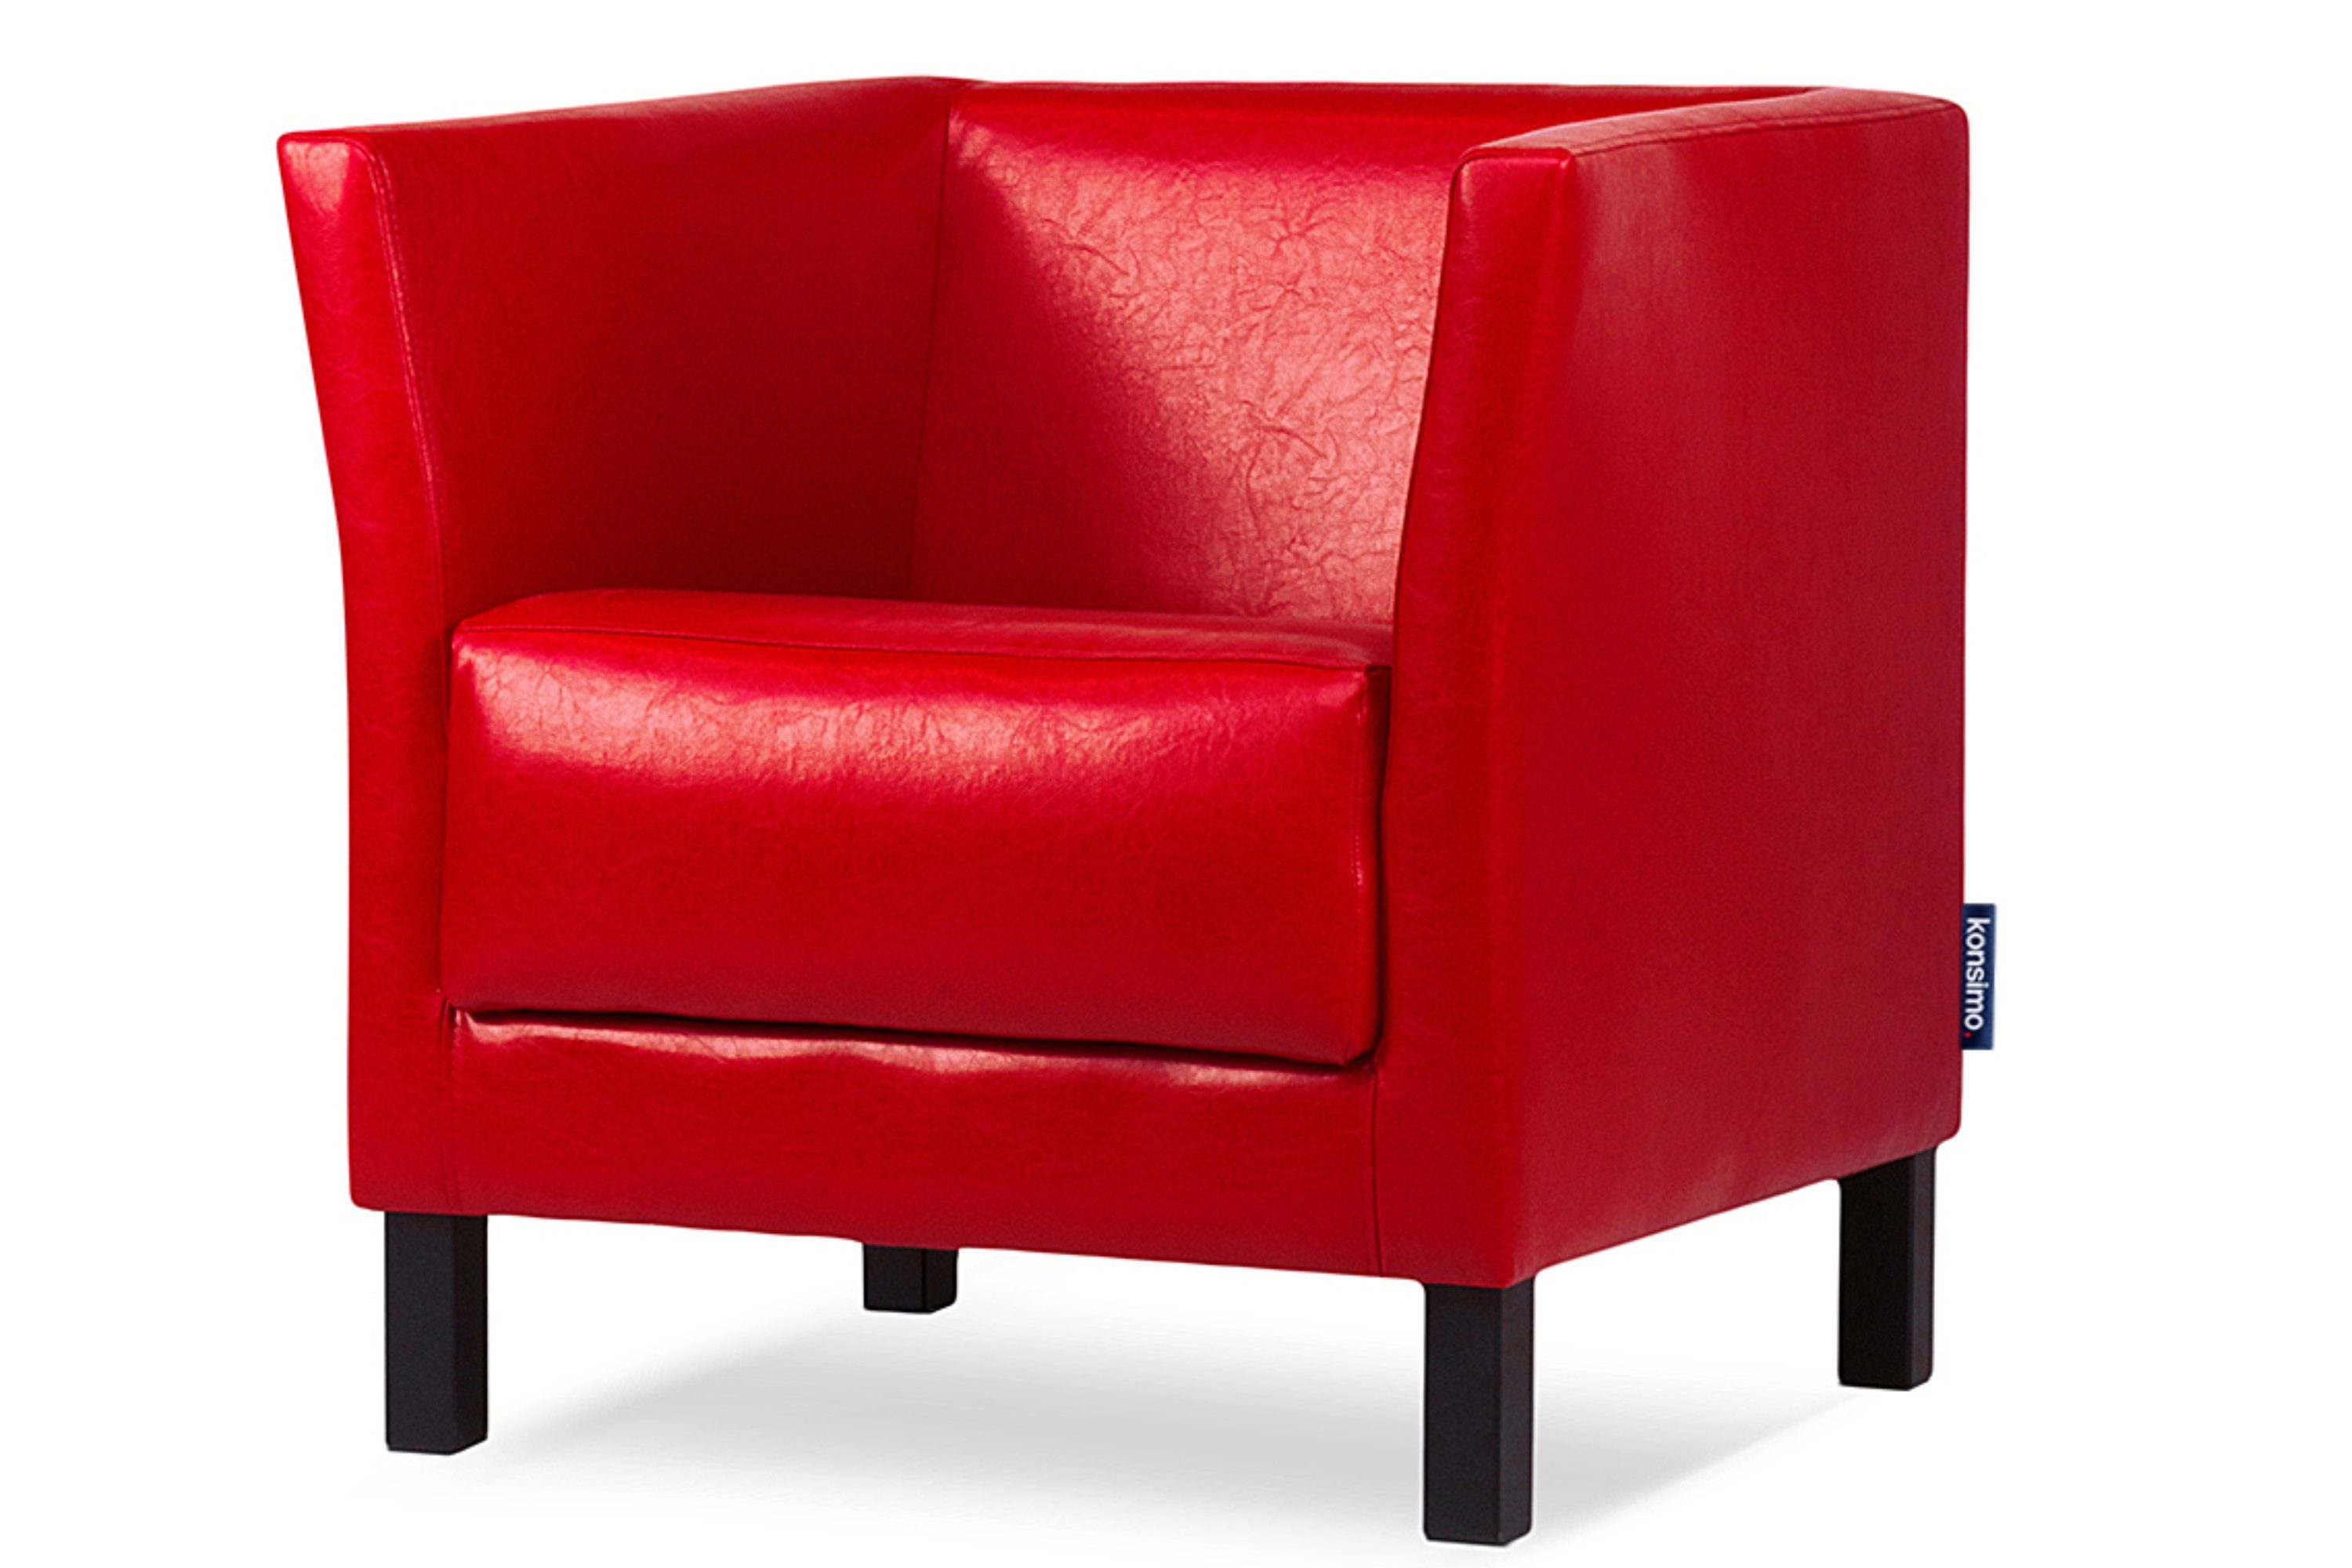 rot ESPECTO hohe und | Sitzfläche rot Kunstleder Konsimo rot | Massivholzbeine, Rückenlehne, weiche Sessel Sessel, hohe